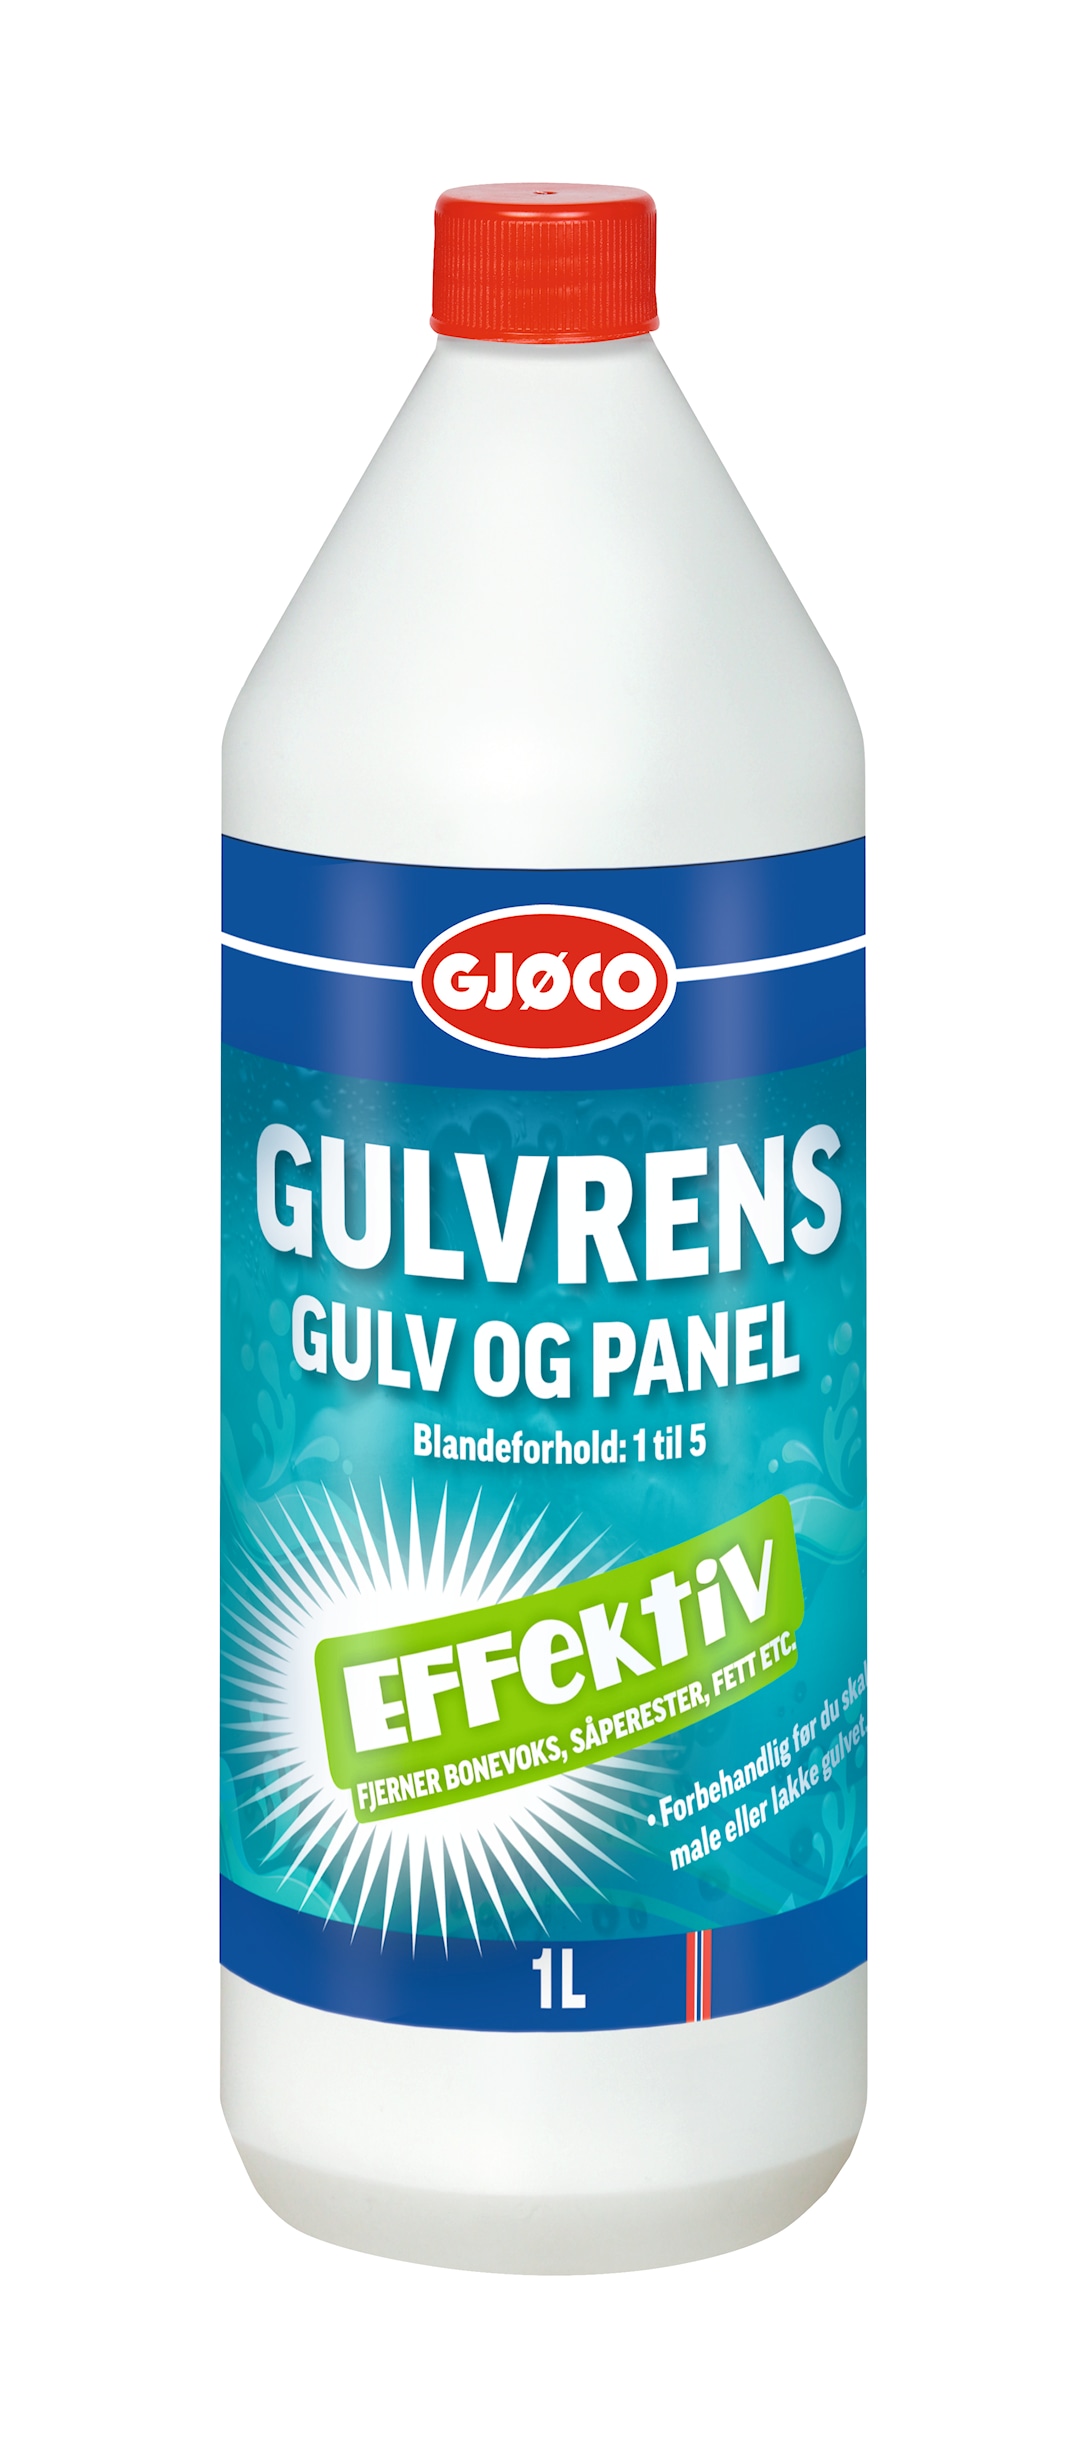 Bedste Gjøco Gulvrens i 2023